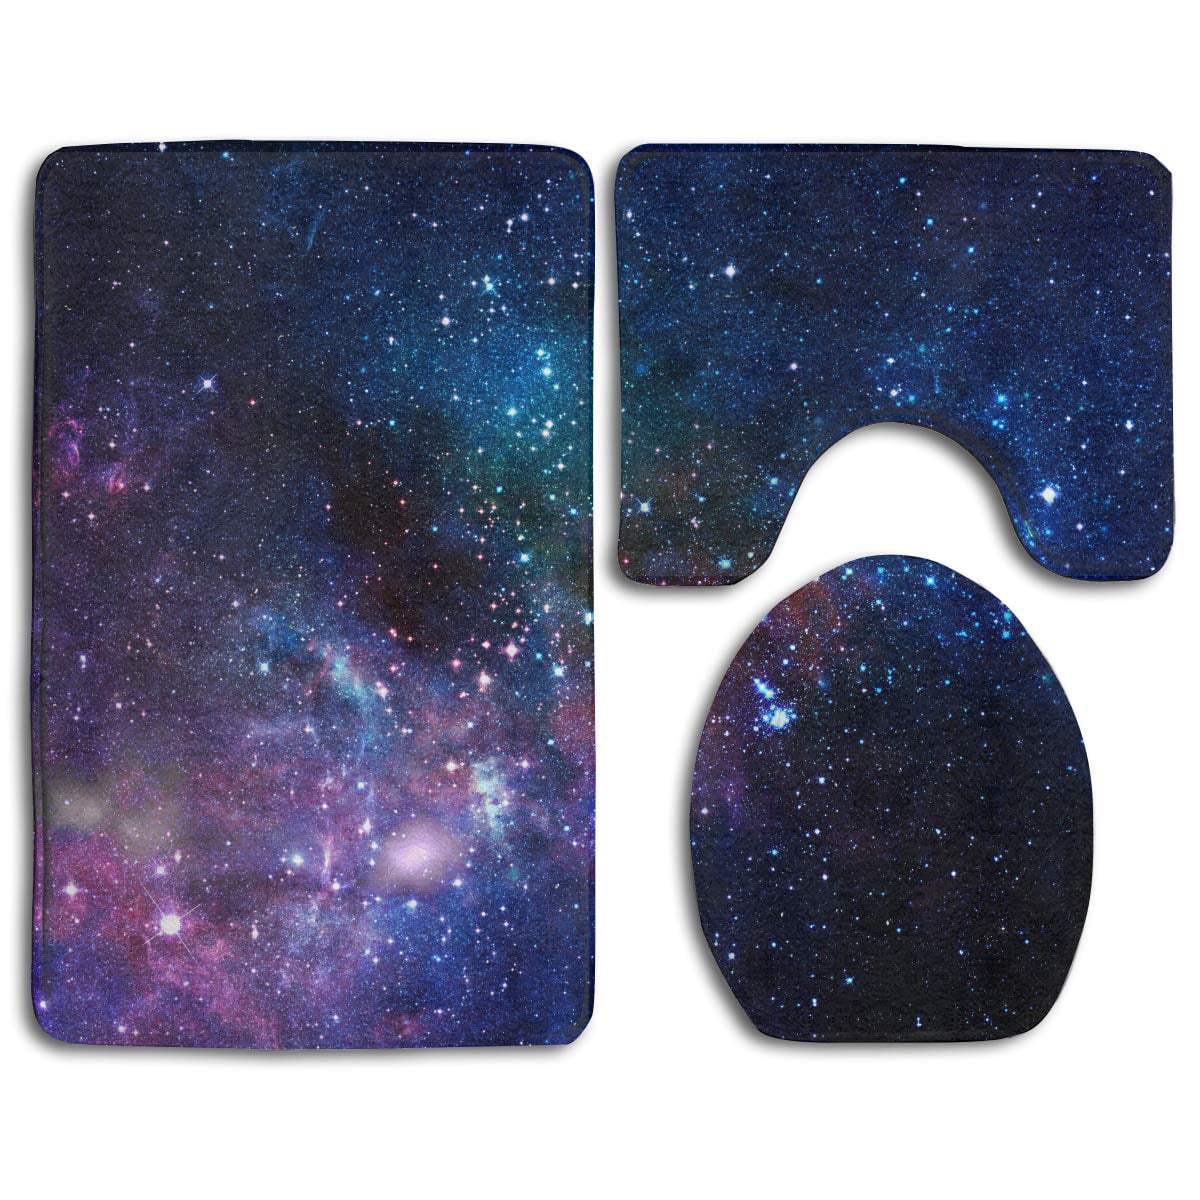 Star-Sky-Galaxy Nebula Non-slip Livingroom Kitchen Bathroom Floor Mat Rug Carpet 